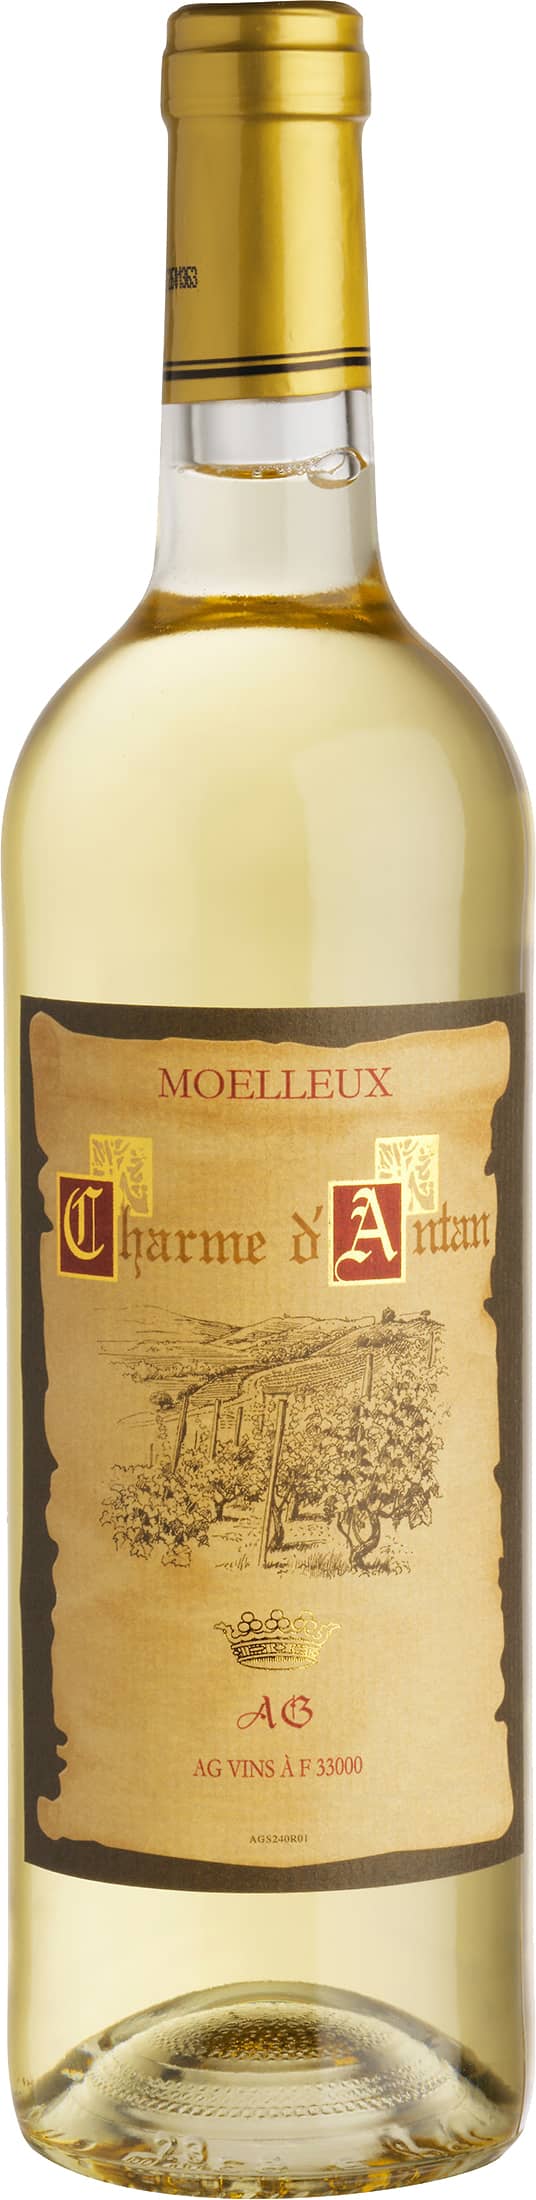 https://www.agvins.fr/static/img/vins/charme-d-antan-blanc-moelleux.jpg